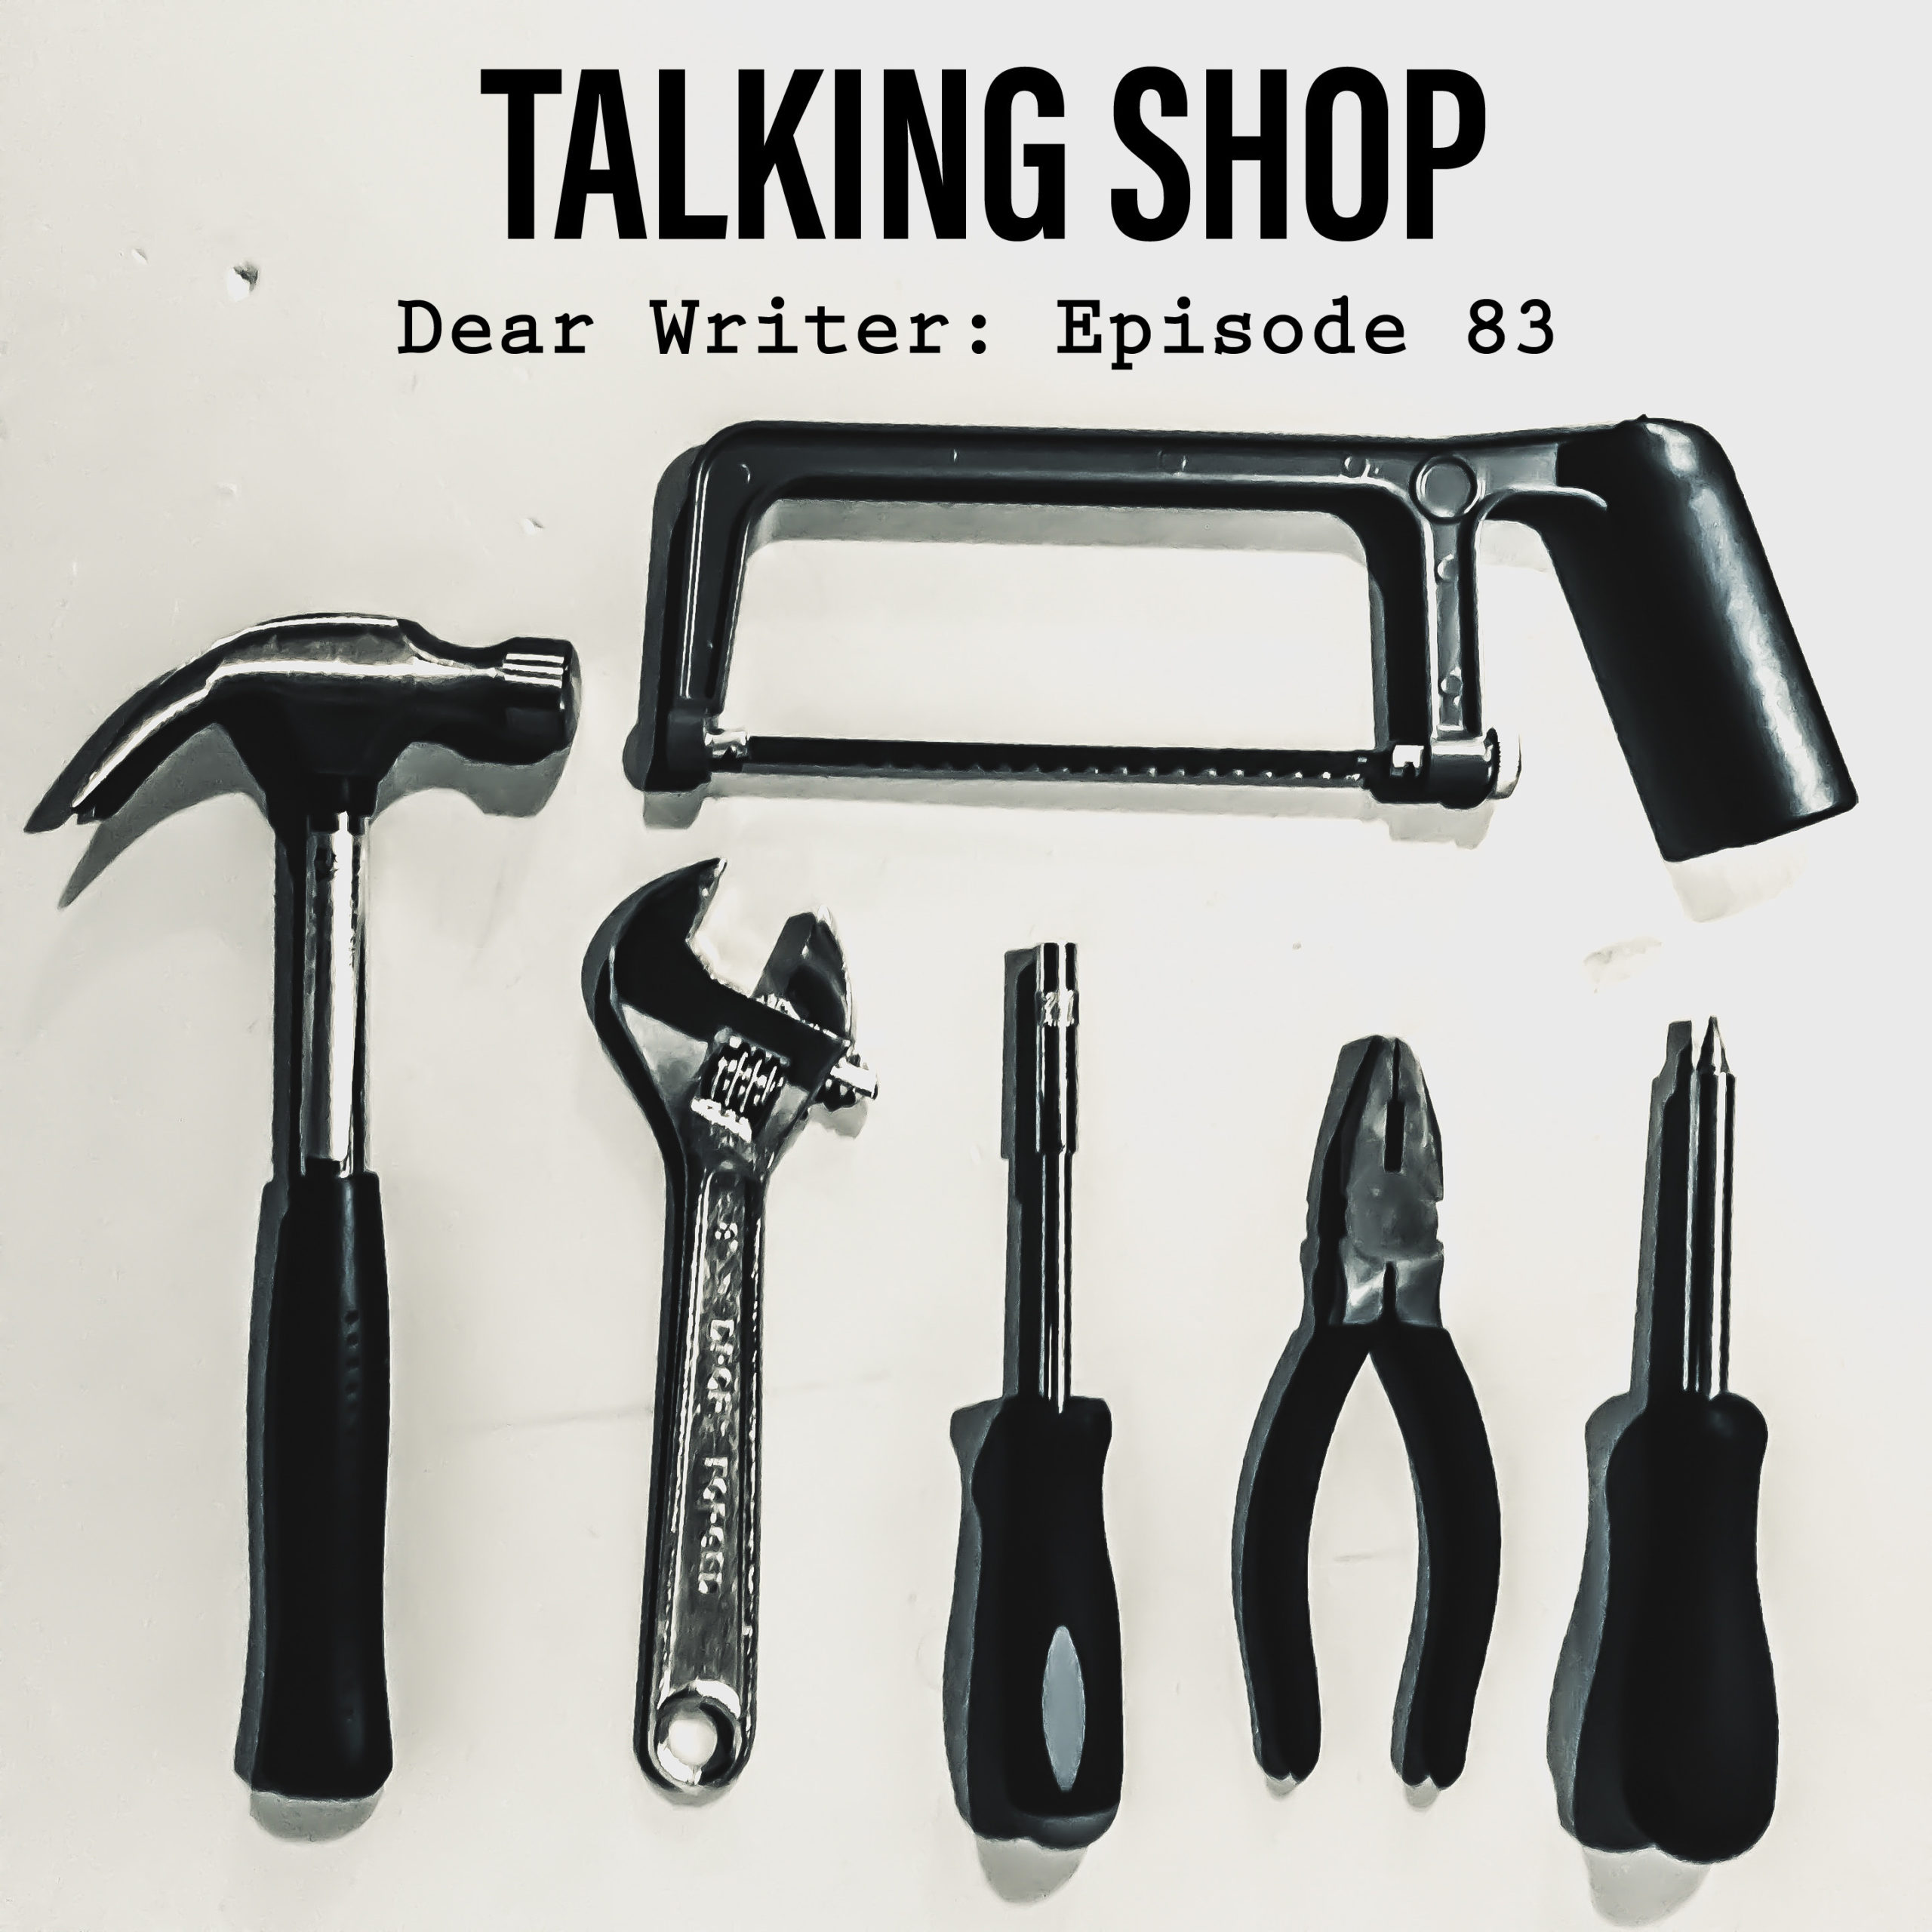 Talking Shop - Fantasy World Building / Crafting Novels and Short Stories